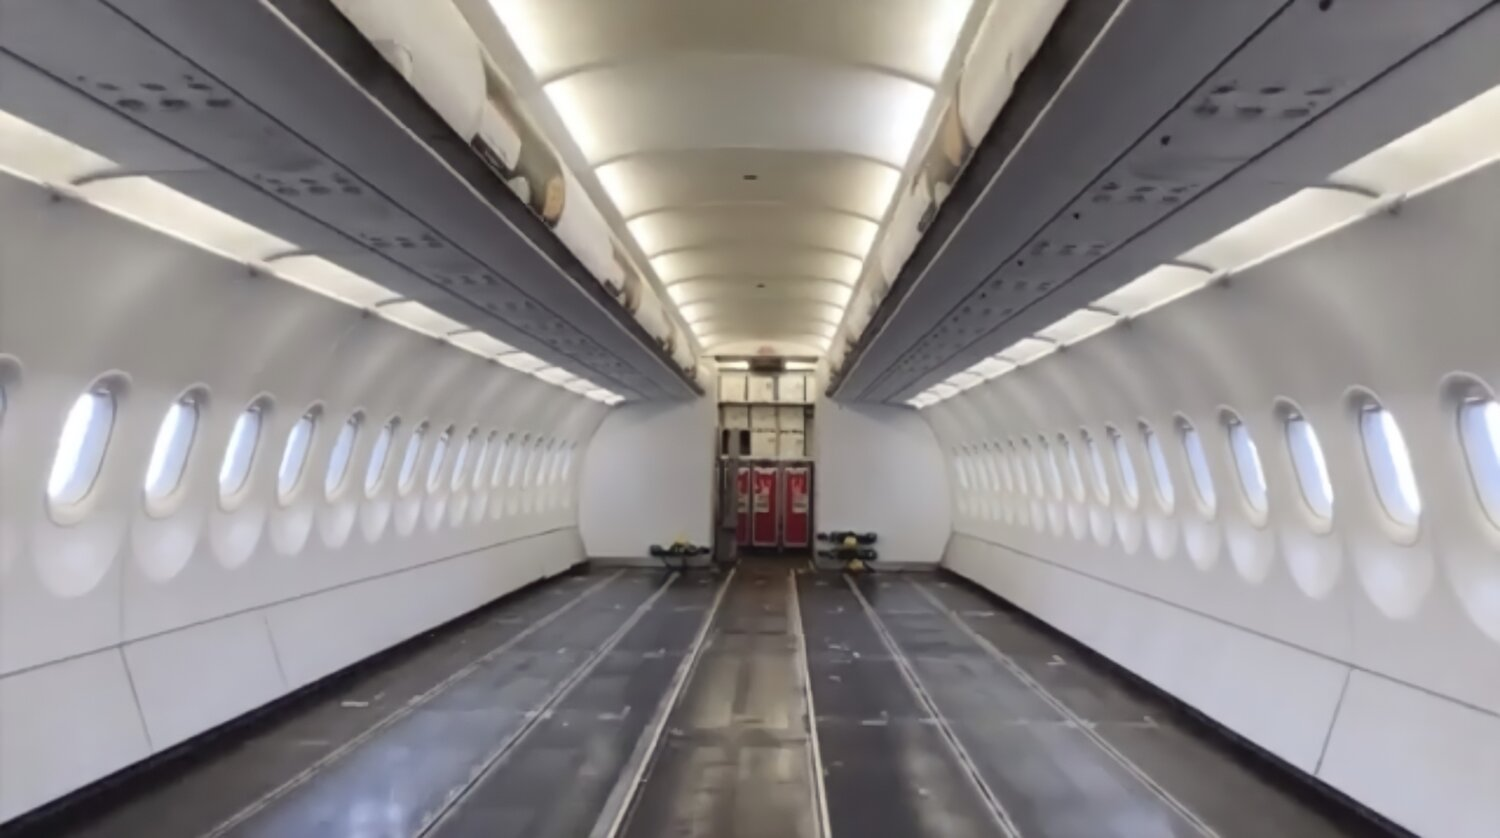 The interior of a converted AirAsia A320 passenger aircraft as a cargo-only aircraft.